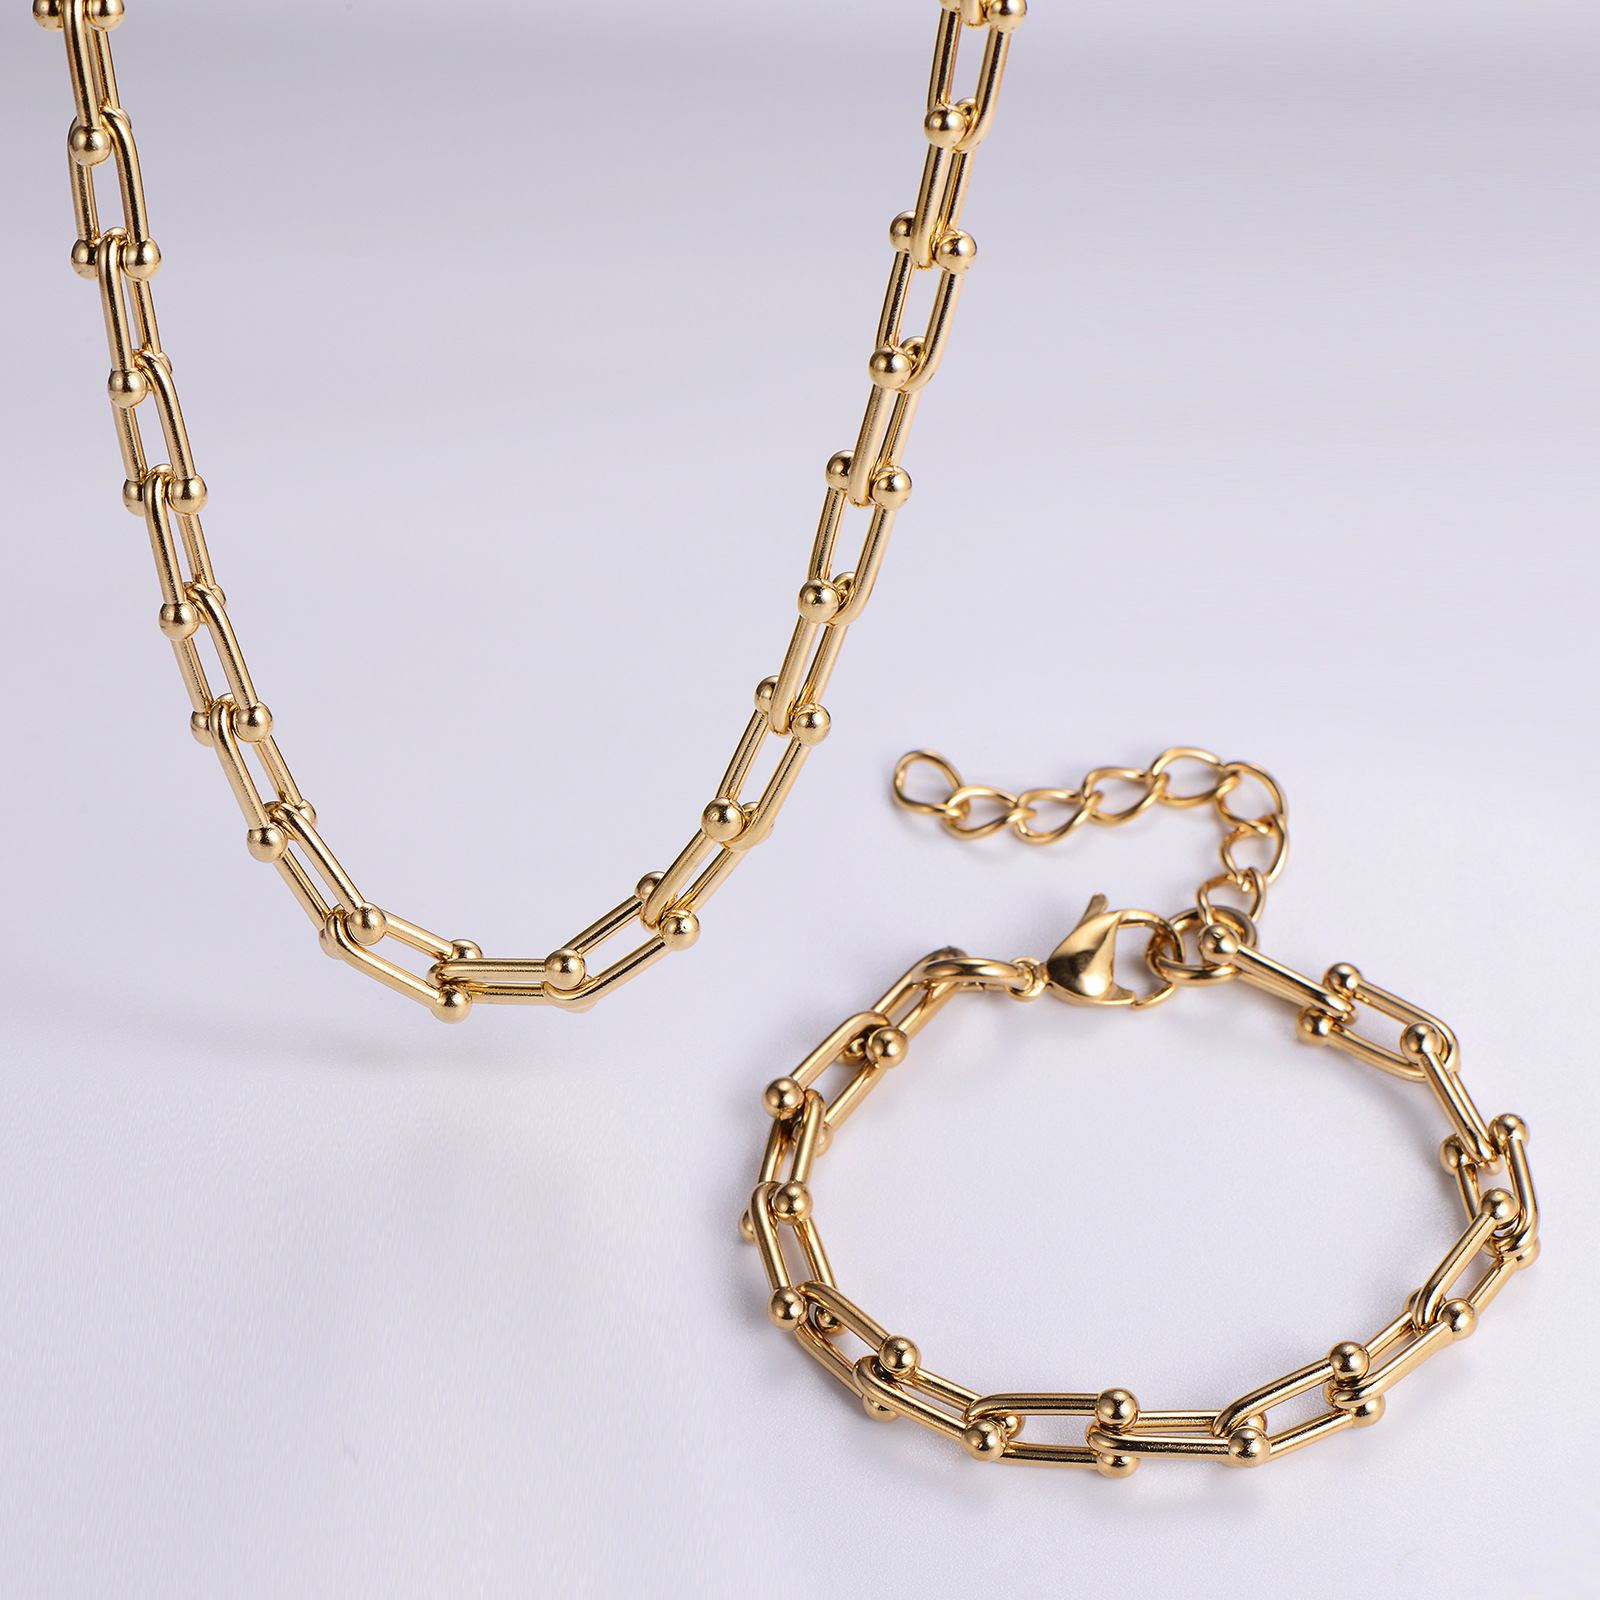 Gold bracelet and necklace